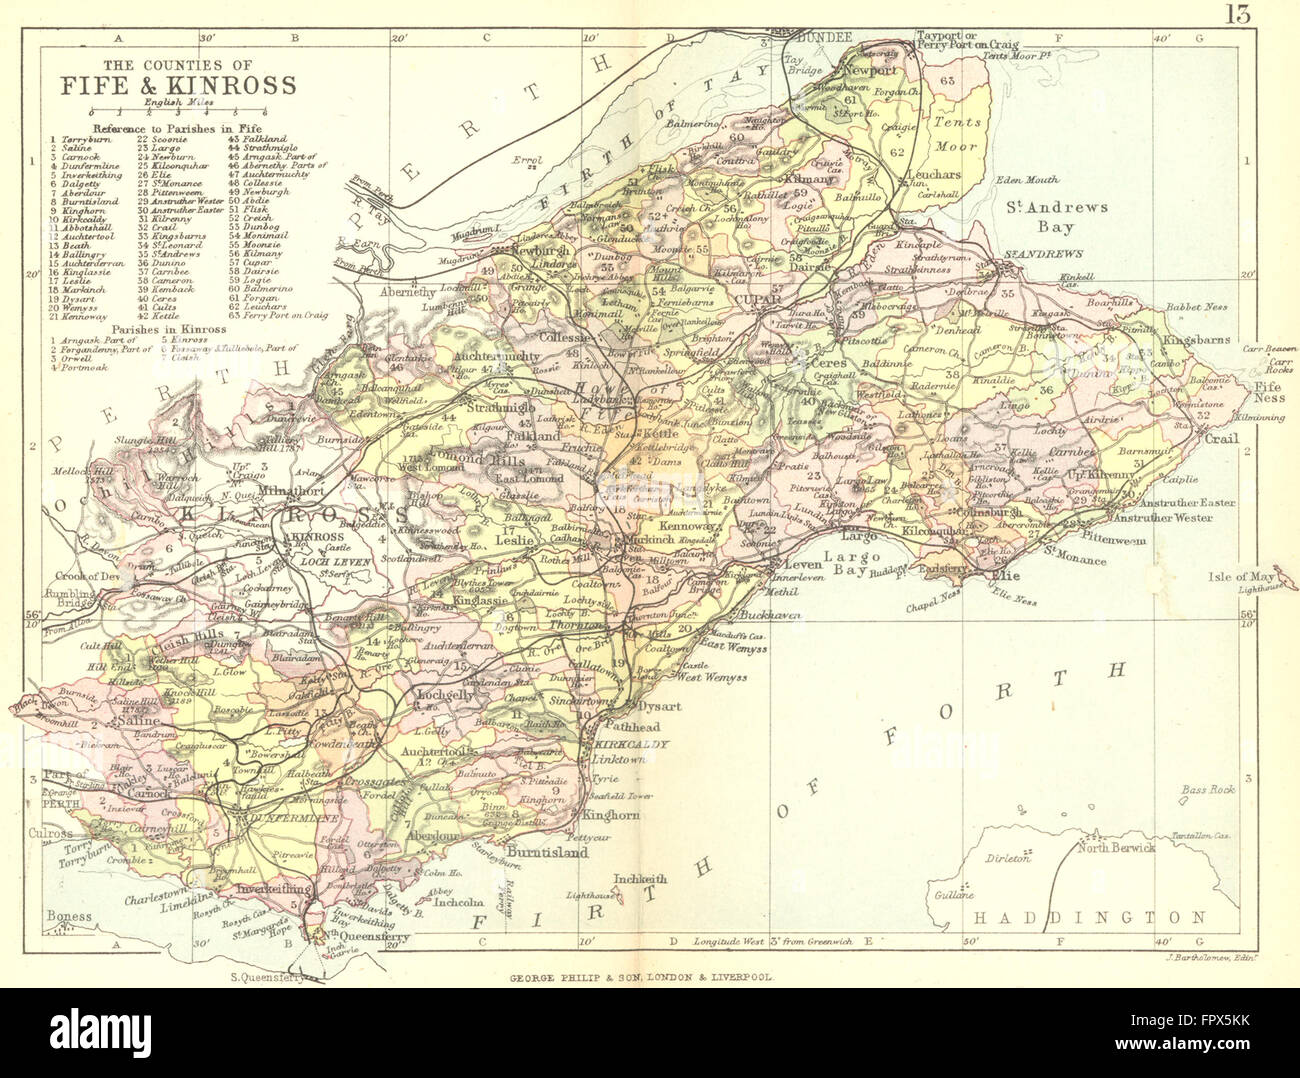 SCOTLAND: Fife & Kinross: Philip: , 1891 antique map Stock Photo